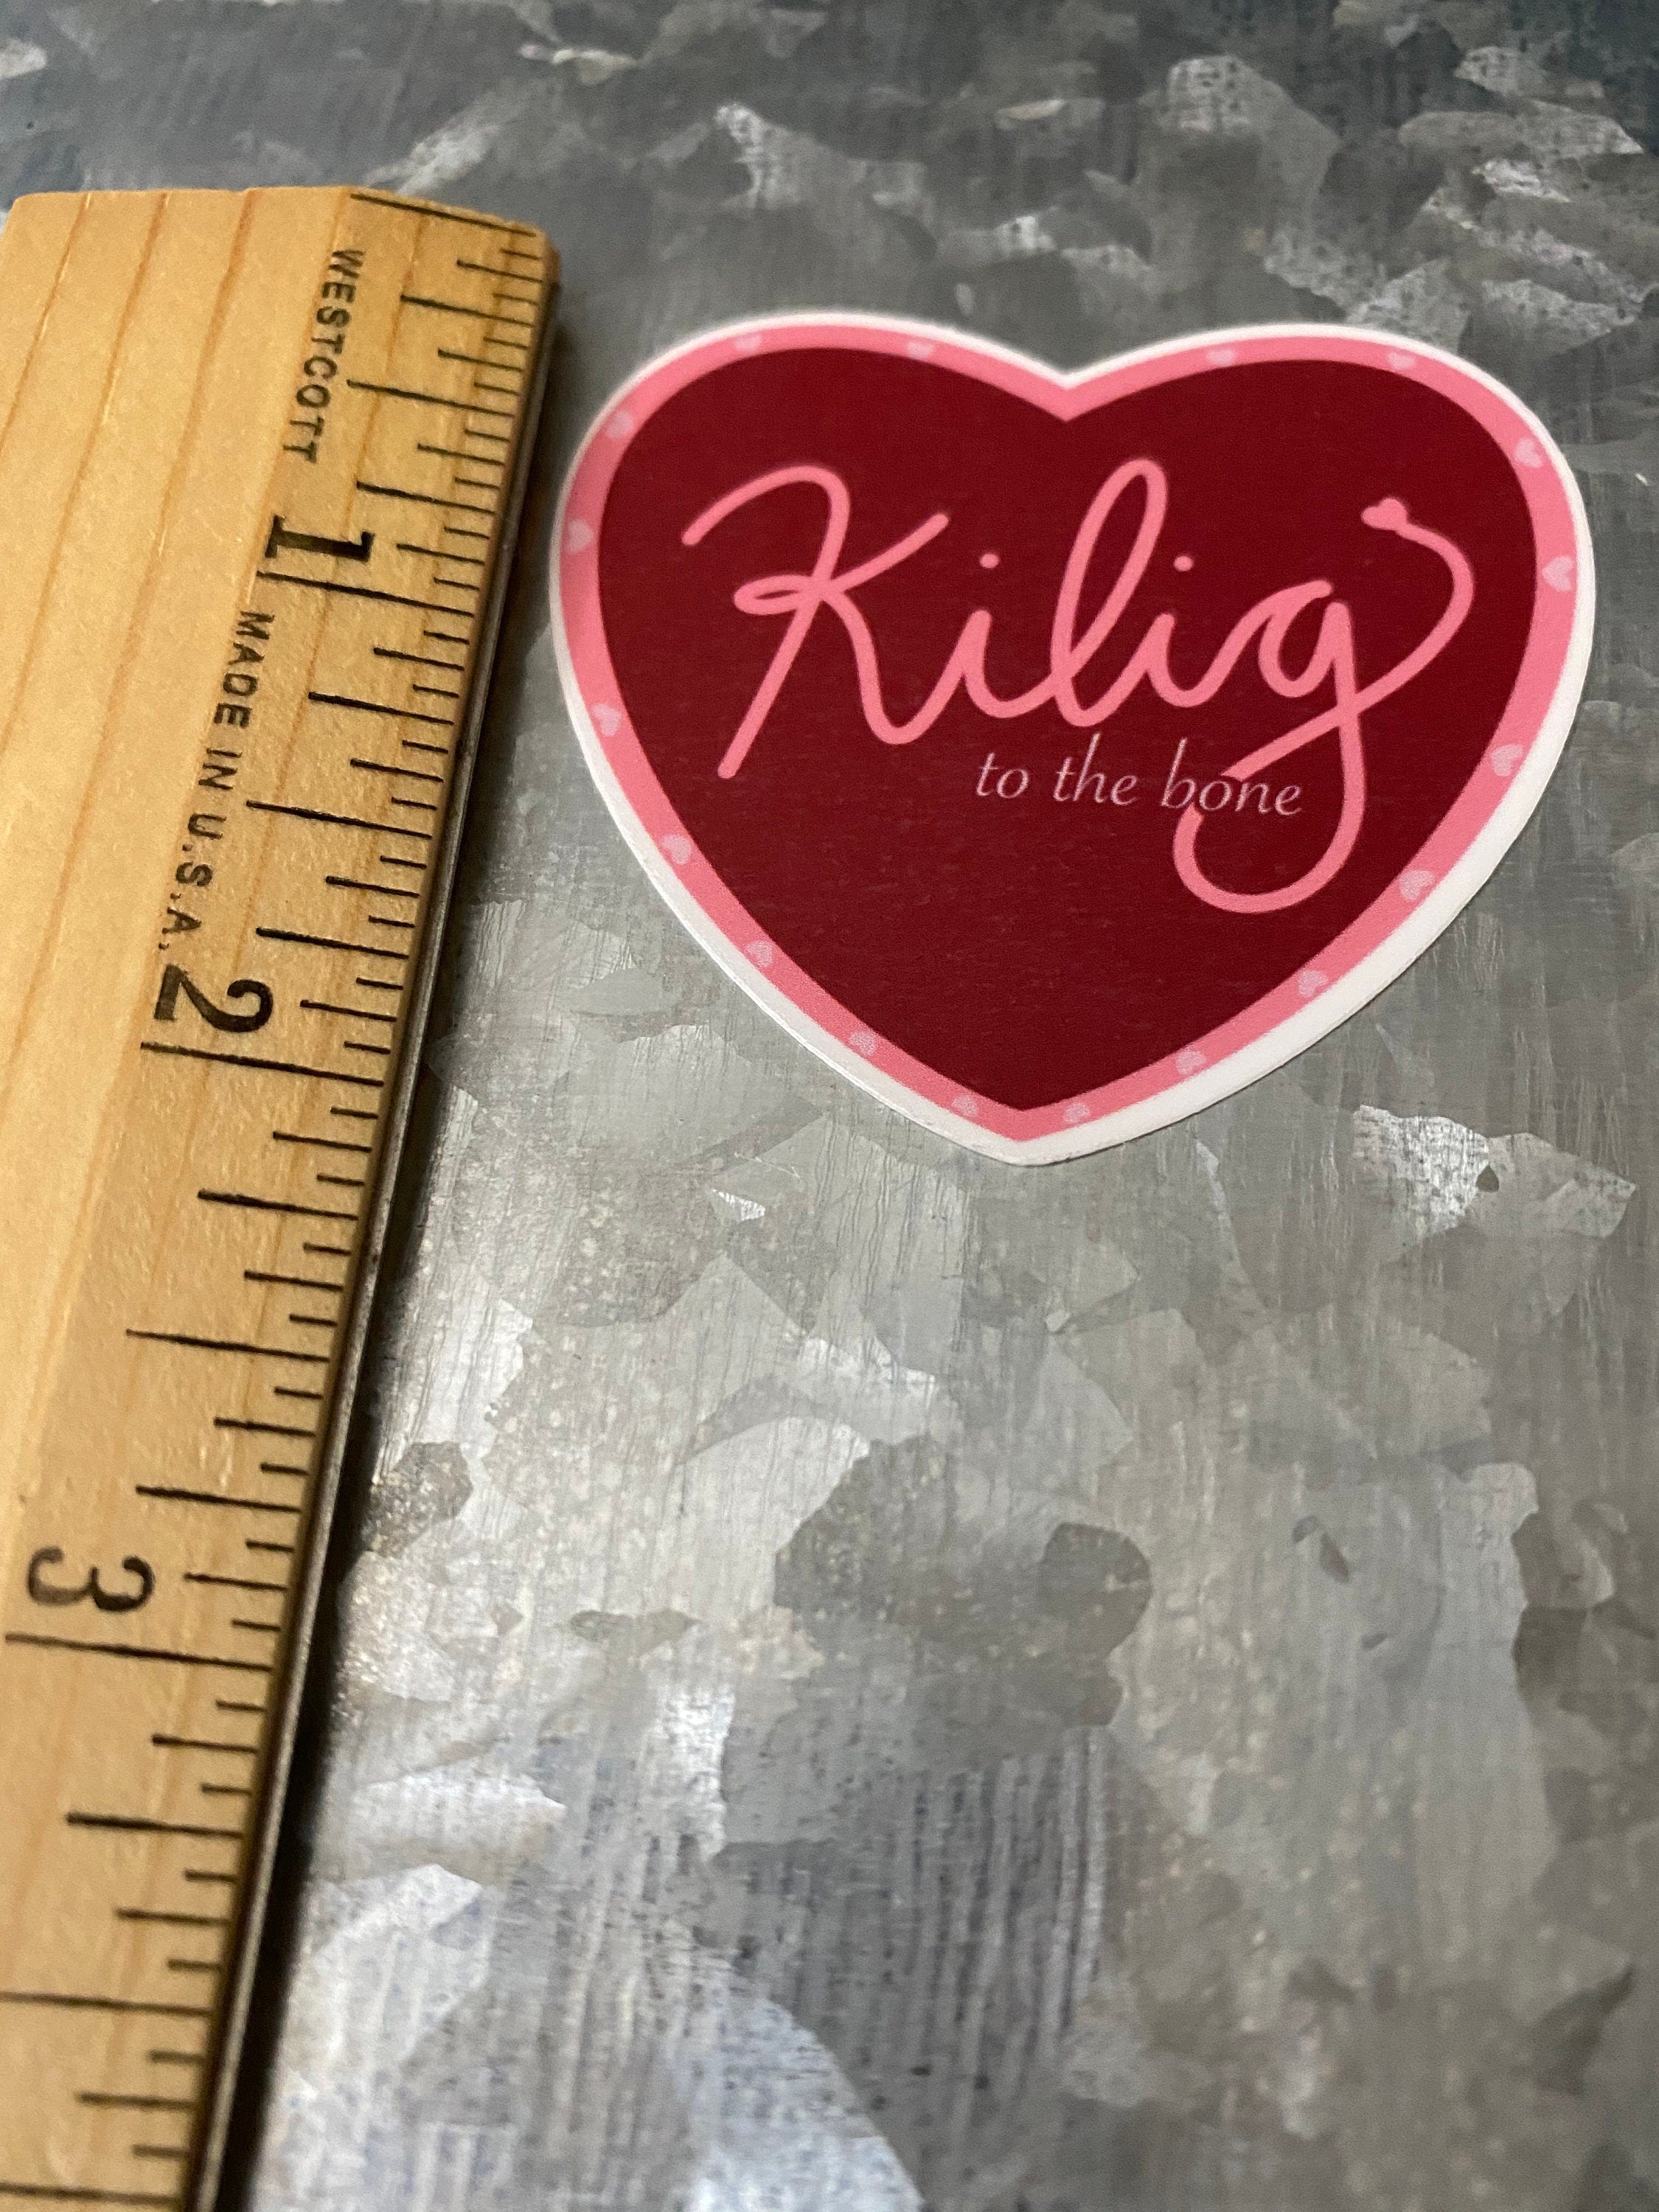 Mie Makes Kilig to the Bone Filipino Saying Sticker, Filipino Sticker, Valentine Sticker, Philippines, Hydroflask Sticker, Waterbottle Sticker, Heart